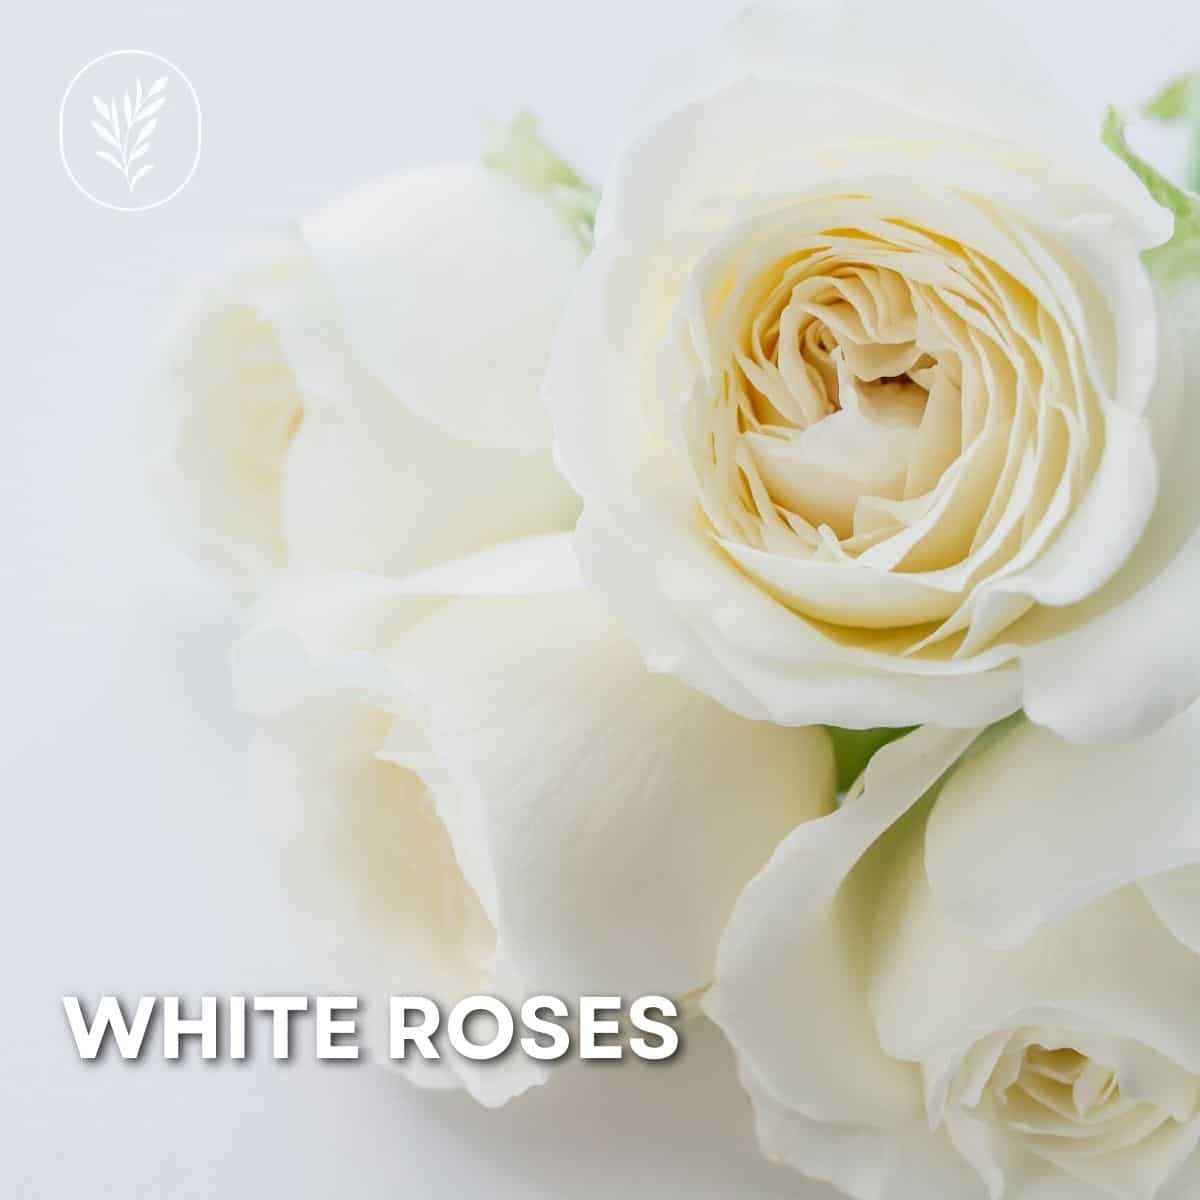 White roses via @home4theharvest